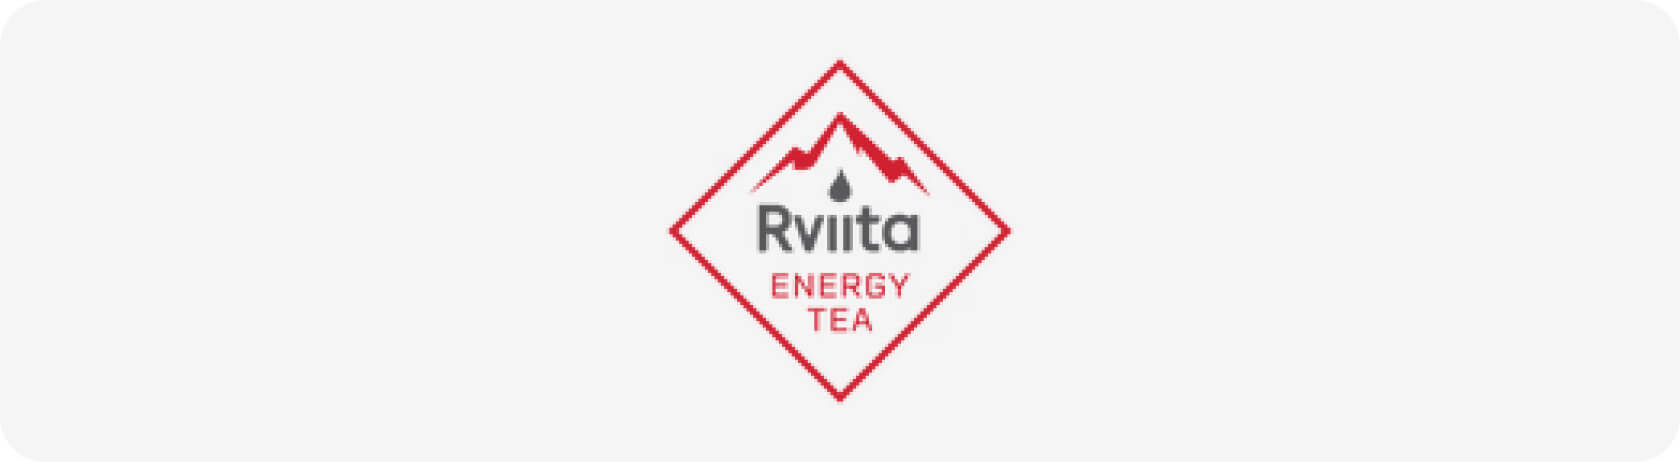 Rviita Enery Tea logo with grey background.